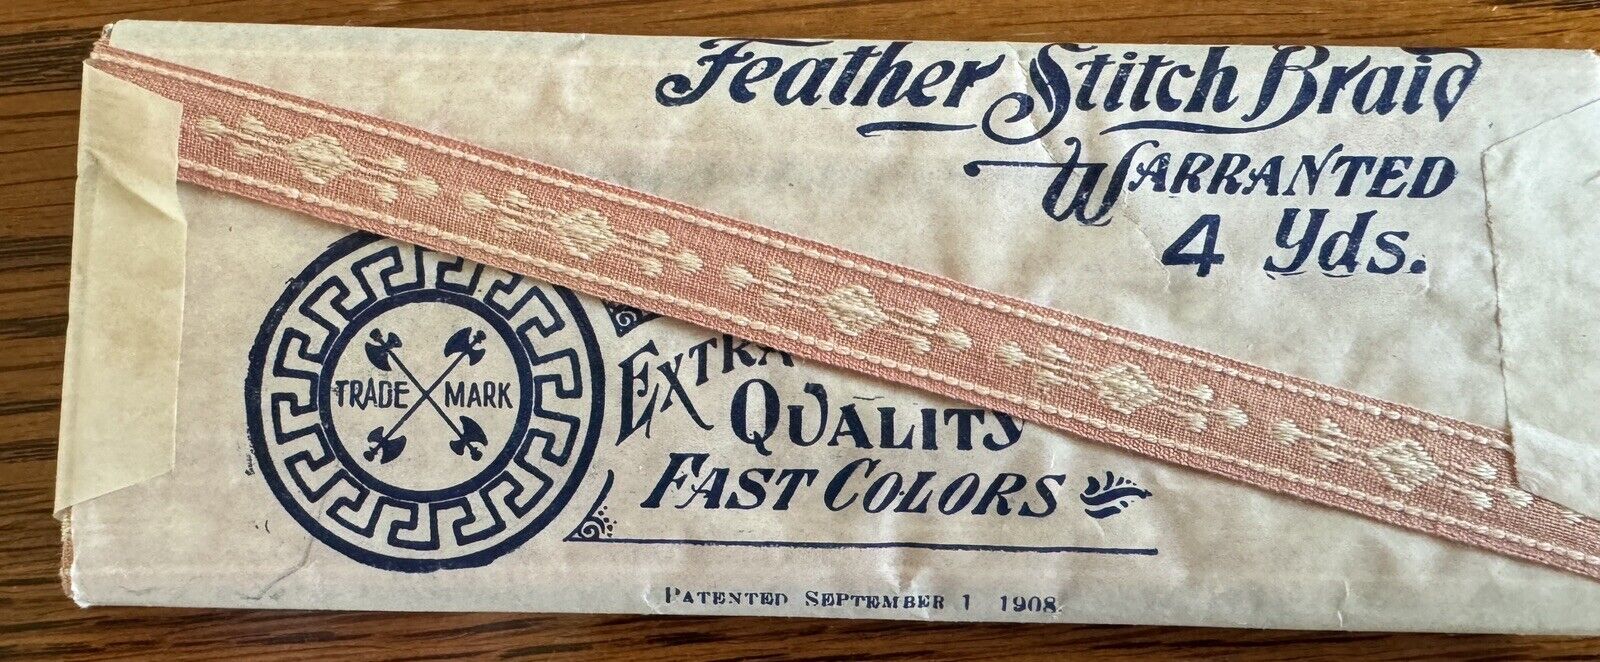 Antique Feather Stitch Braid Original Package White On Pink